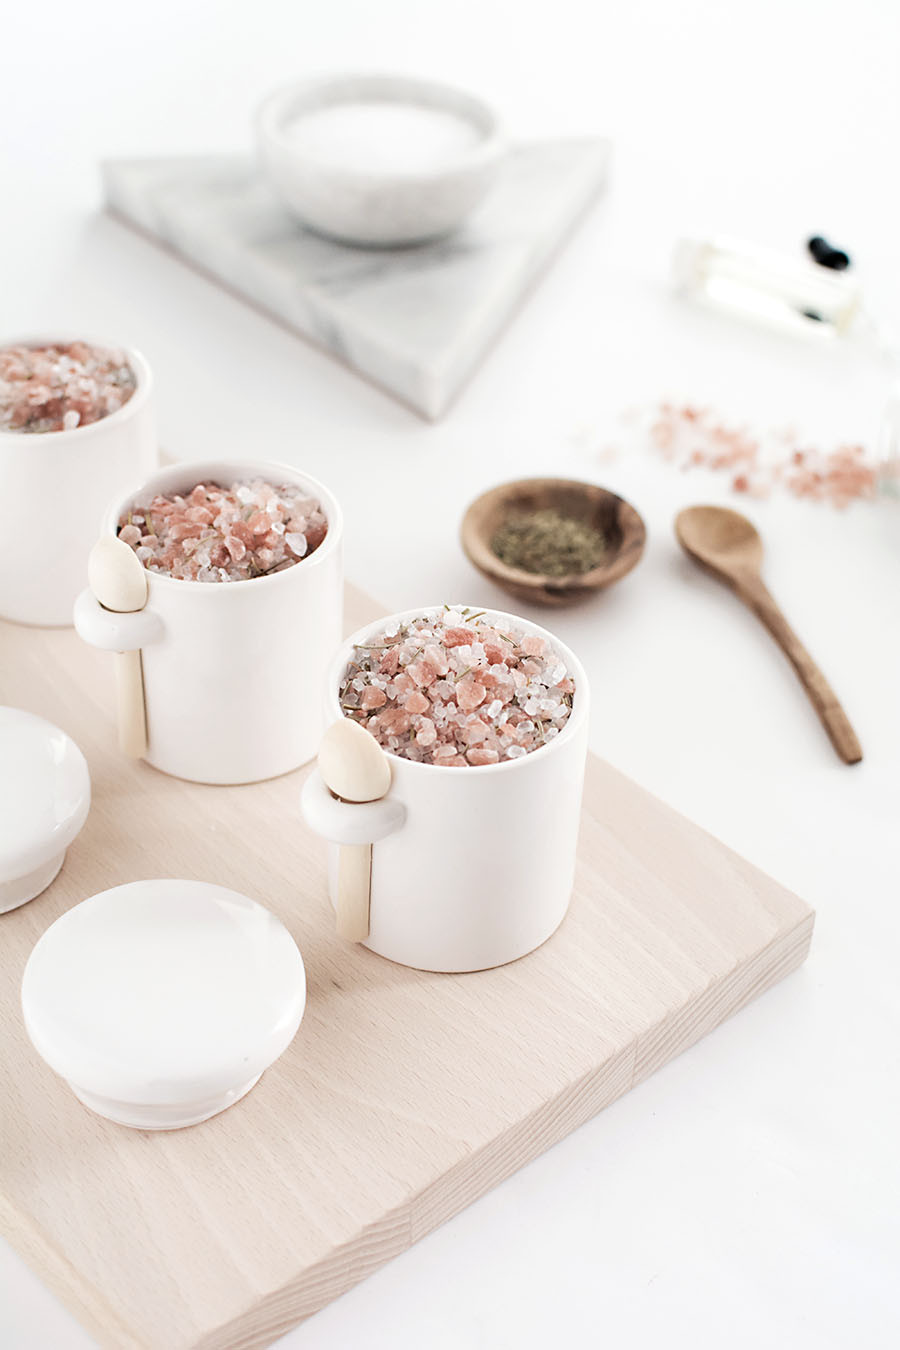 Best ideas about DIY Bath Salts
. Save or Pin DIY Grapefruit Rosemary Bath Salts Homey Oh My Now.